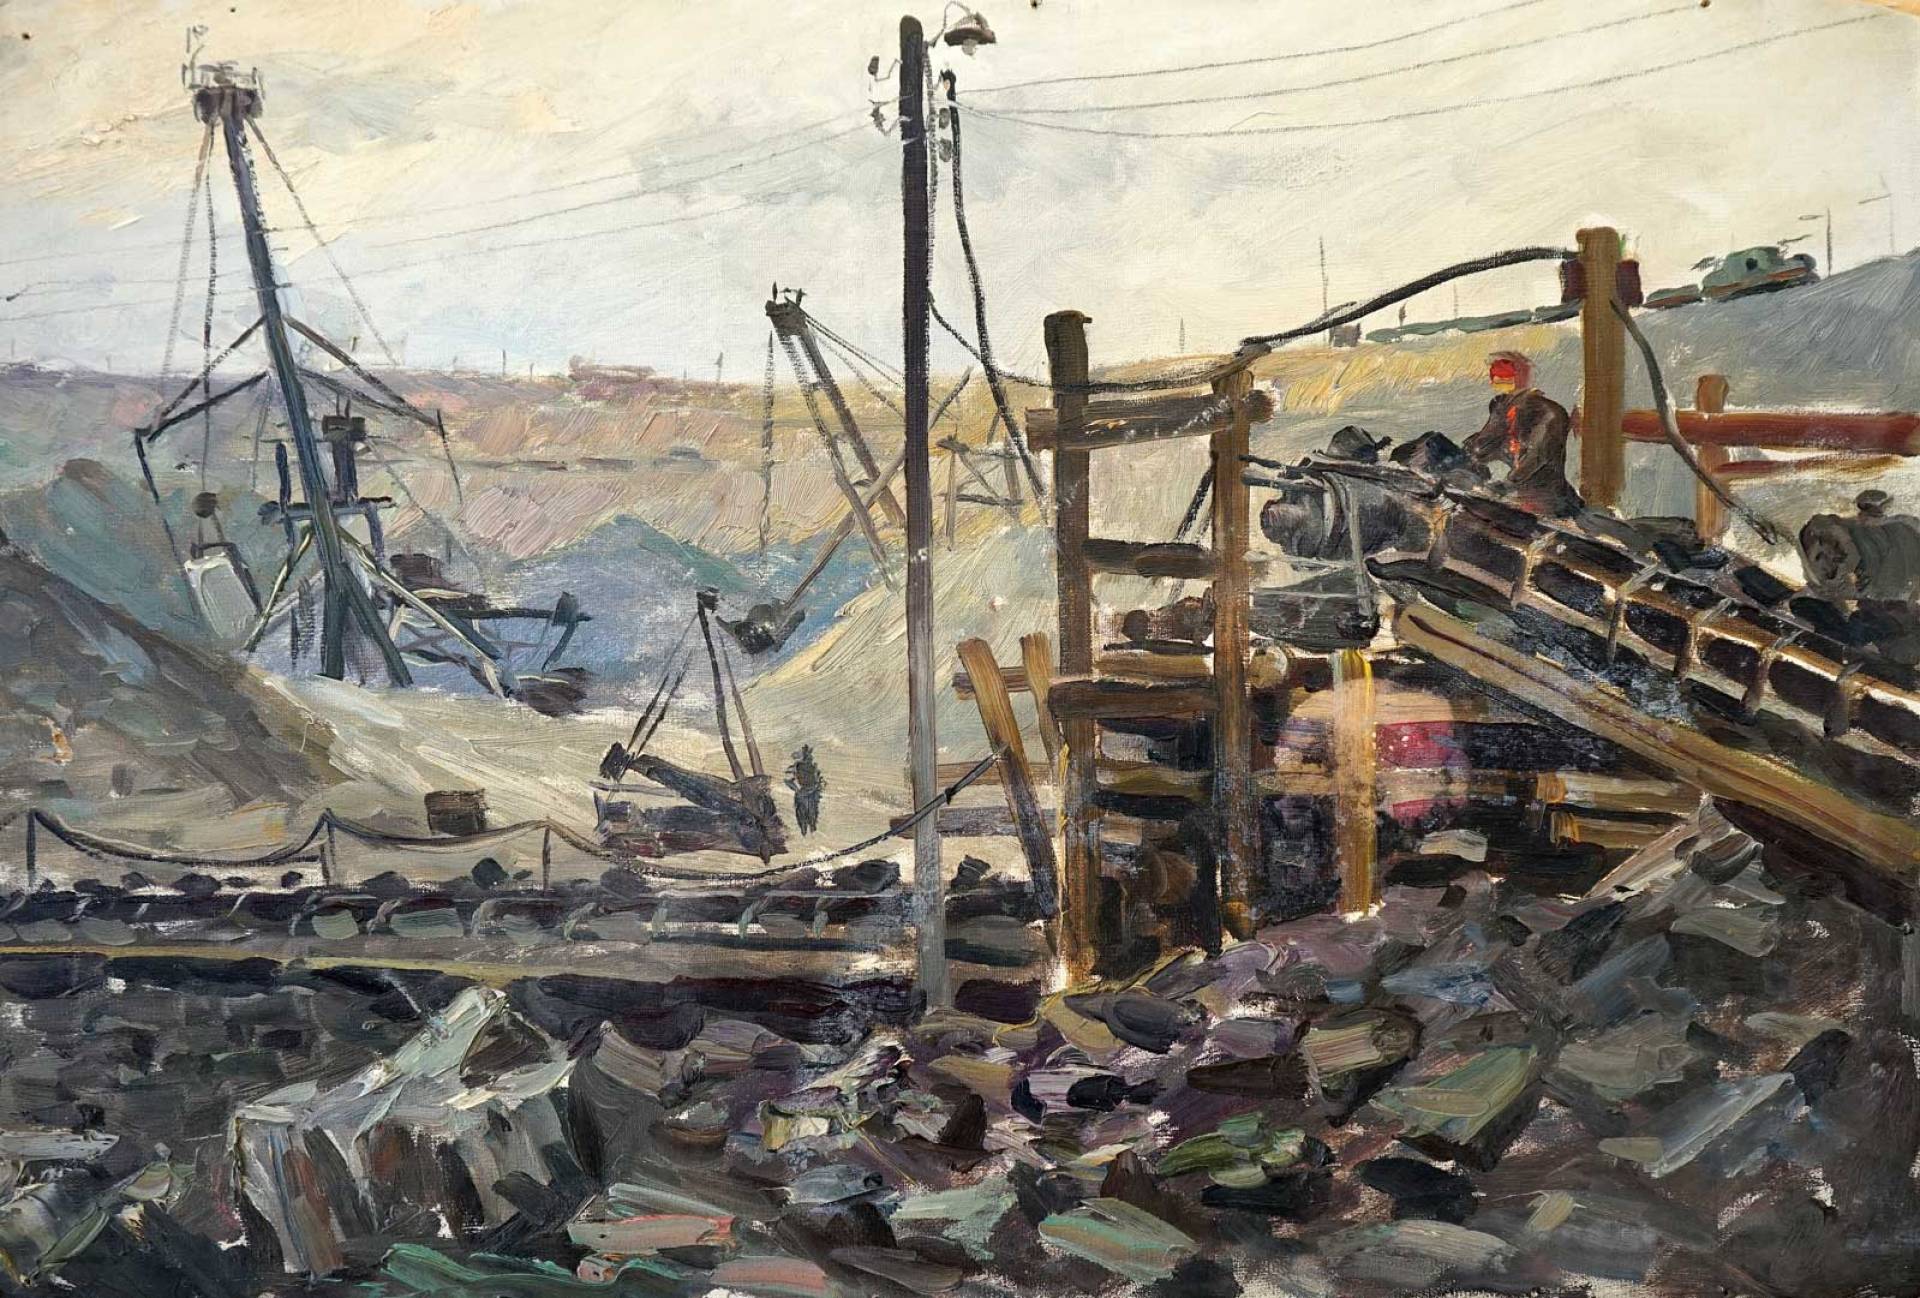 On the Construction - 1, Boris Glushkov, Buy the painting Oil